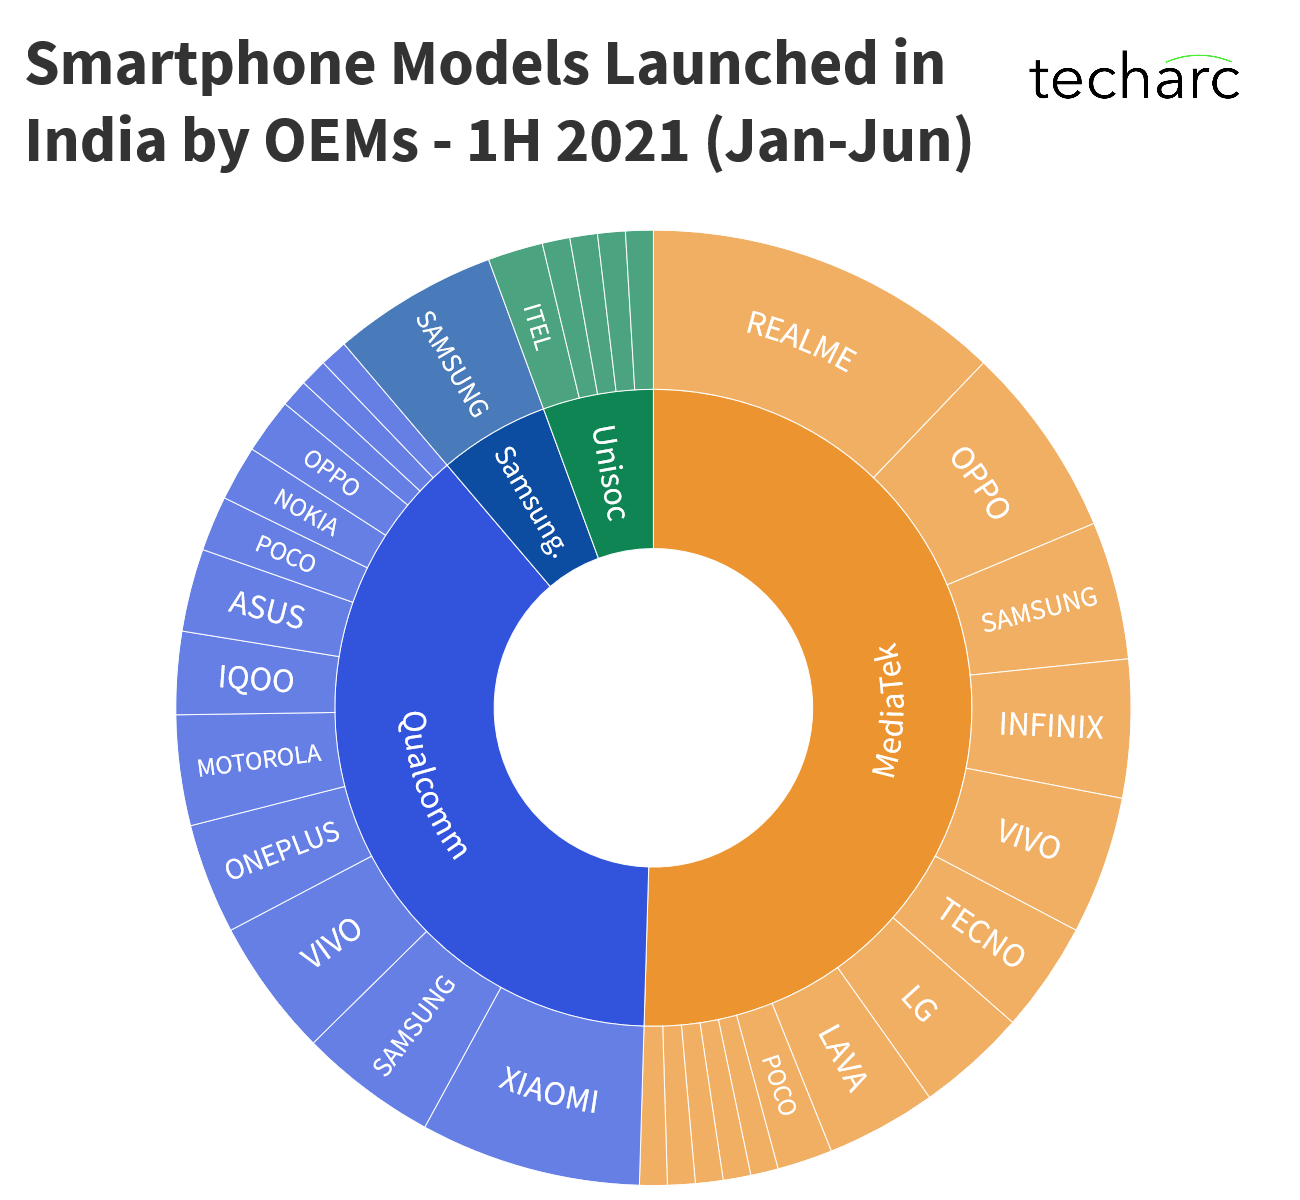 MediaTek emerges as the preferred chipset partner for Smartphone OEMs in India